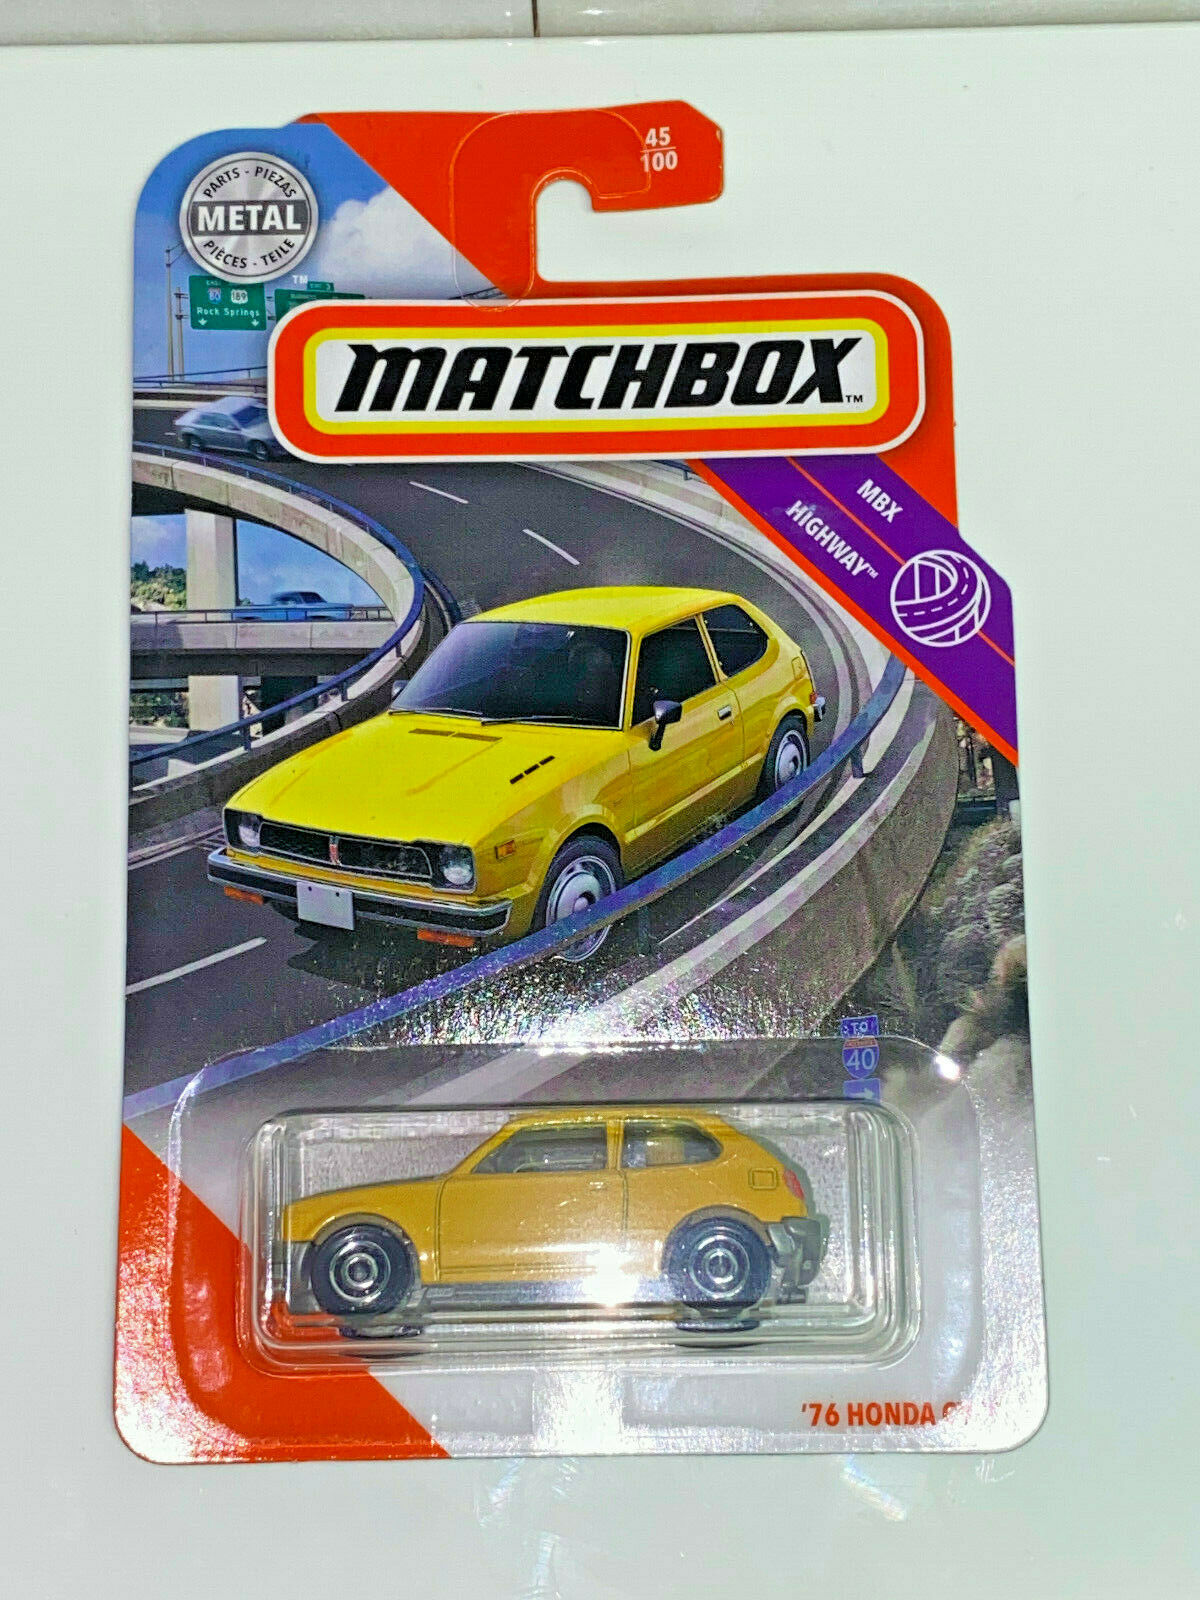 2020 Matchbox MBX Highway '76 Honda CVCC #45/100 NIP